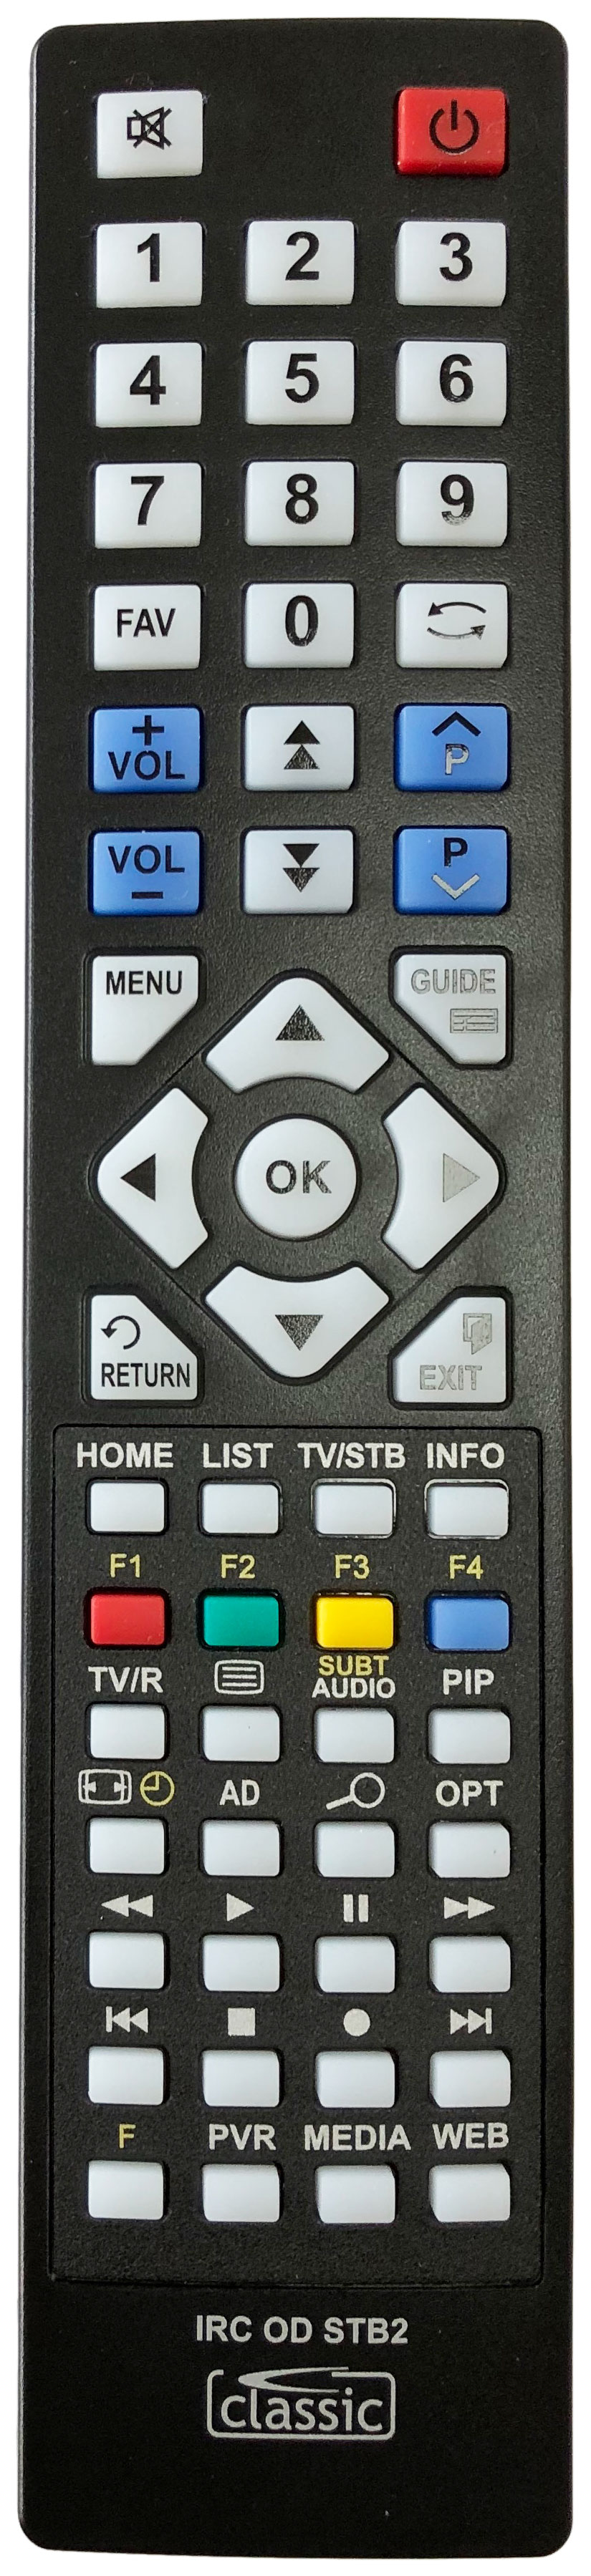 HUMAX RM-L08 Remote Control Alternative  